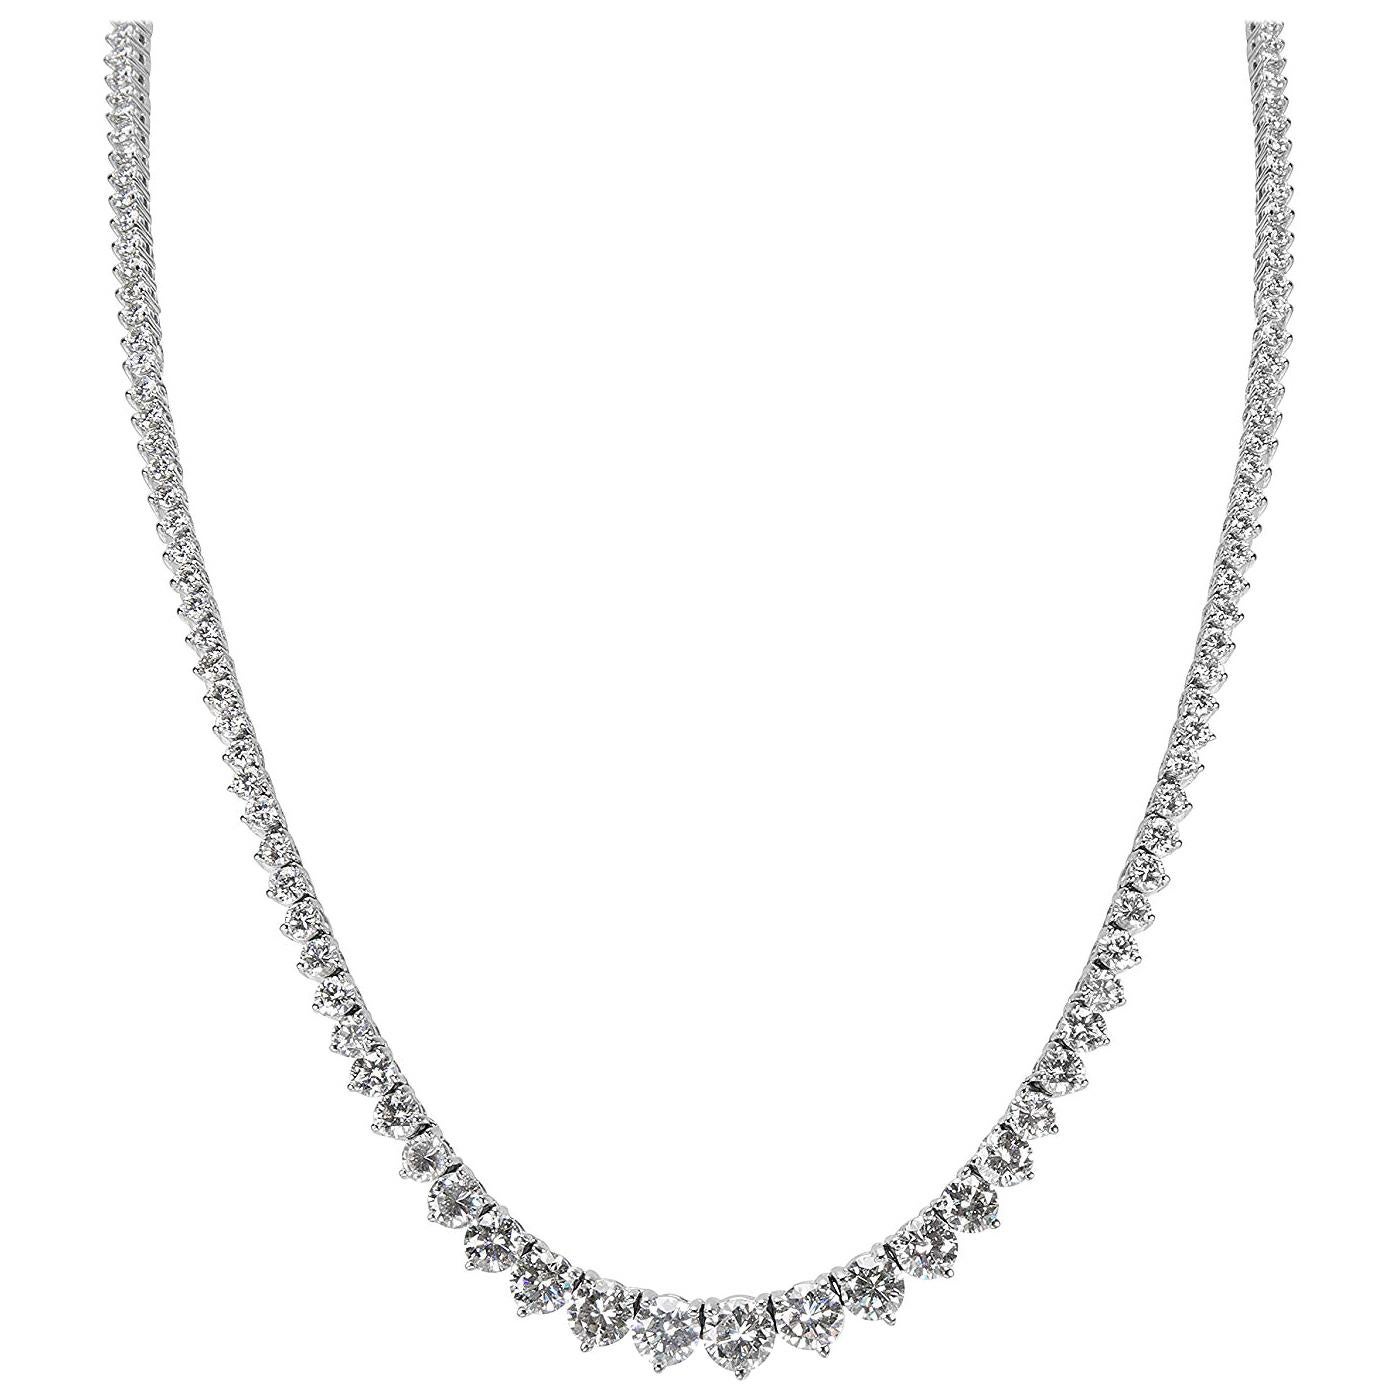 4.22 Carat Total Diamond Riviera Necklace in 14 Karat White Gold